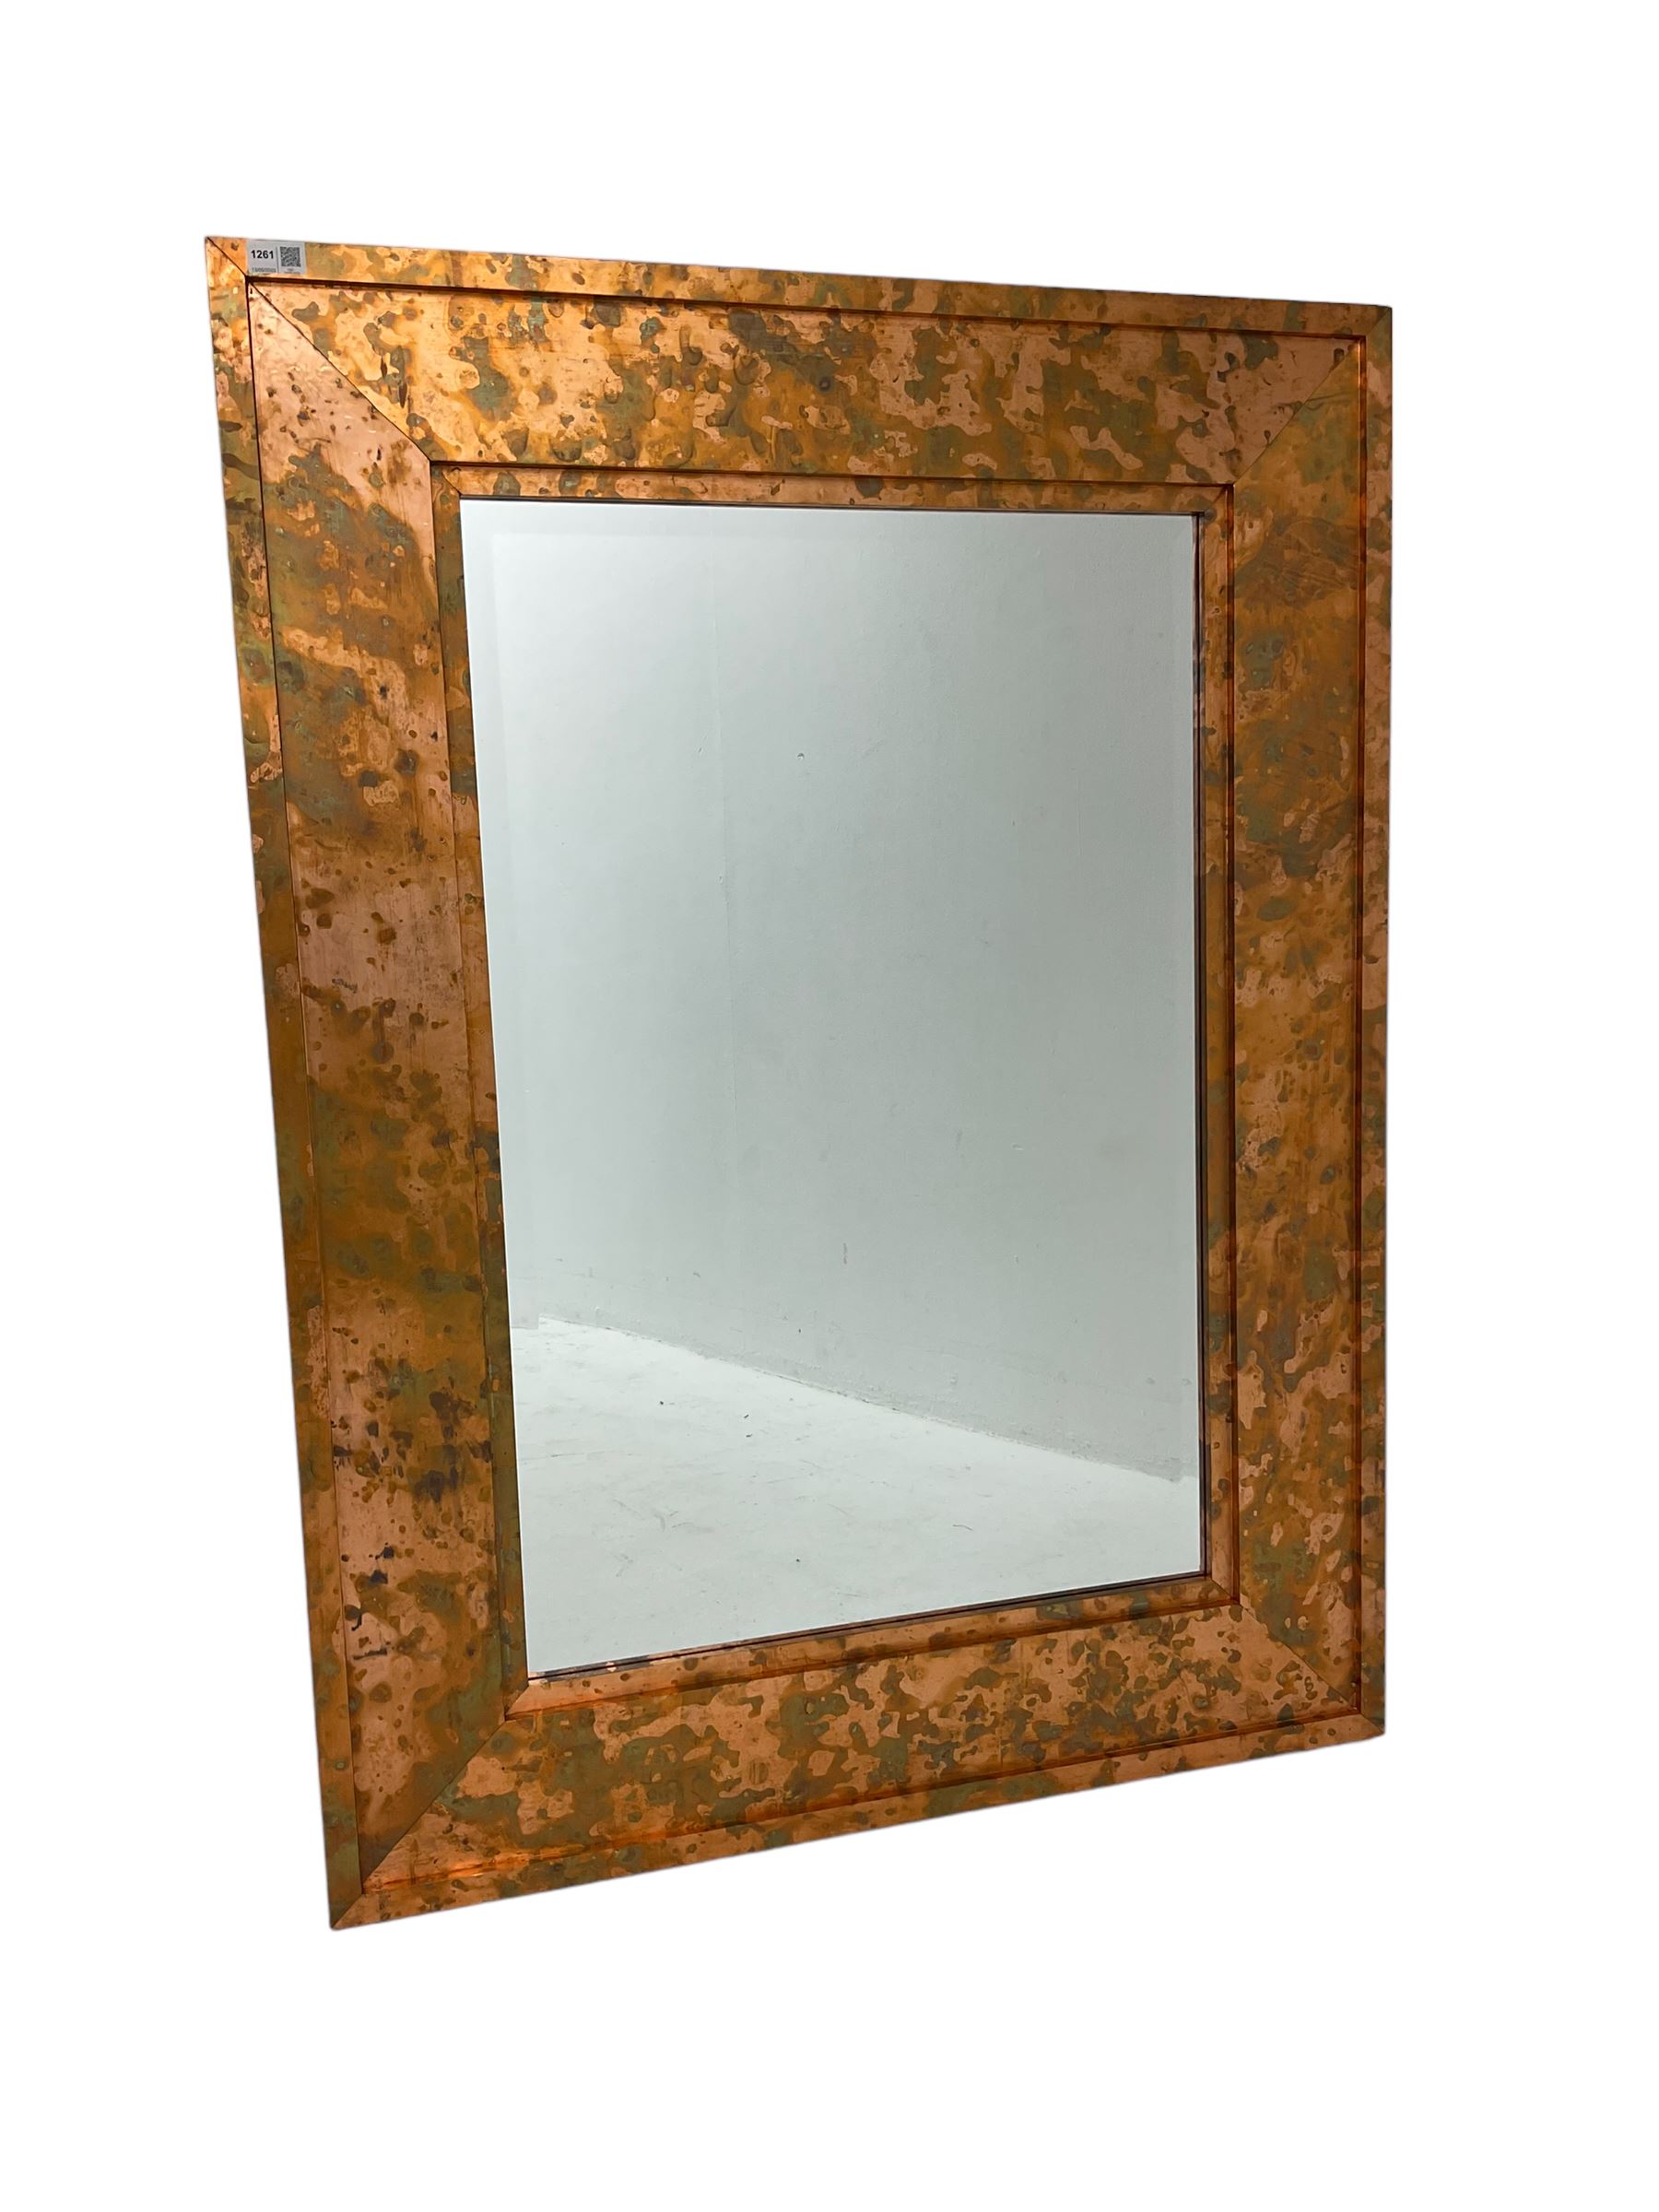 Large copper framed mirror - Image 5 of 5